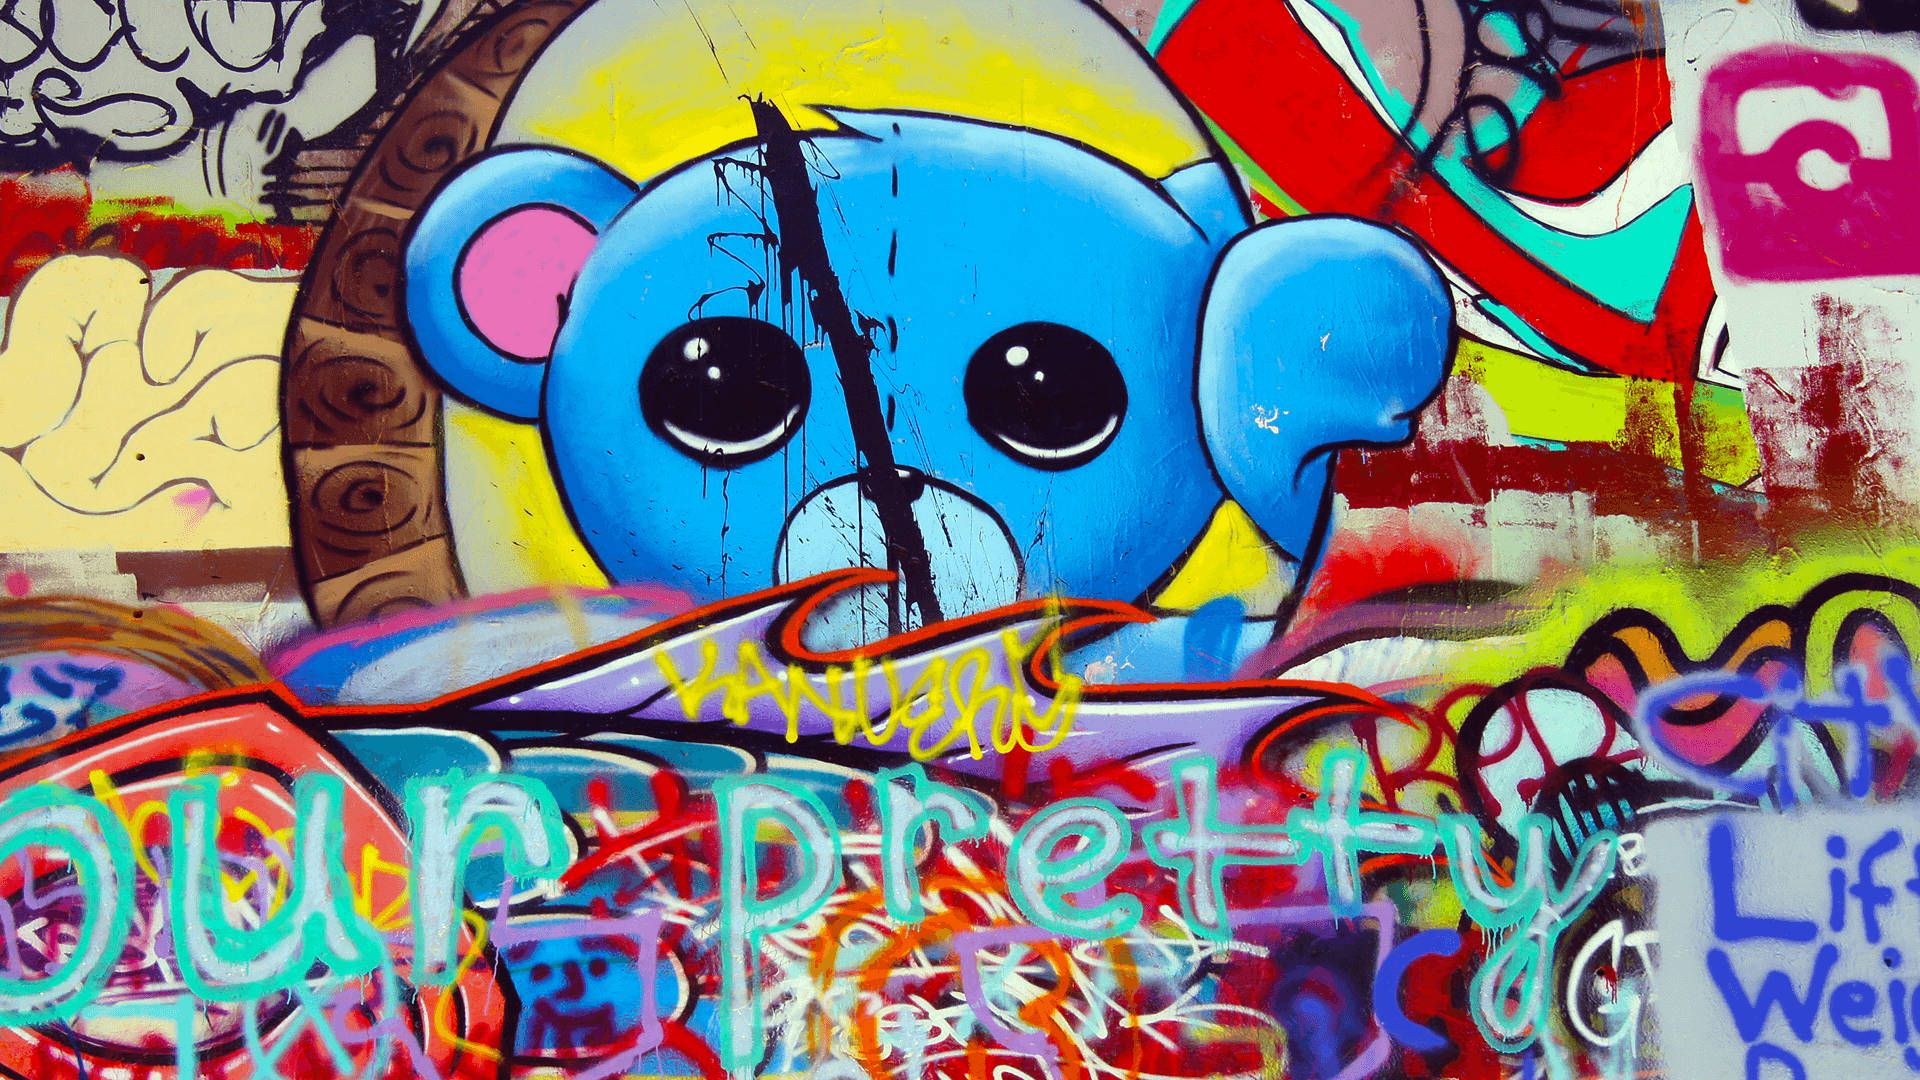 A colorful graffiti wallpaper with a blue teddy bear - Graffiti